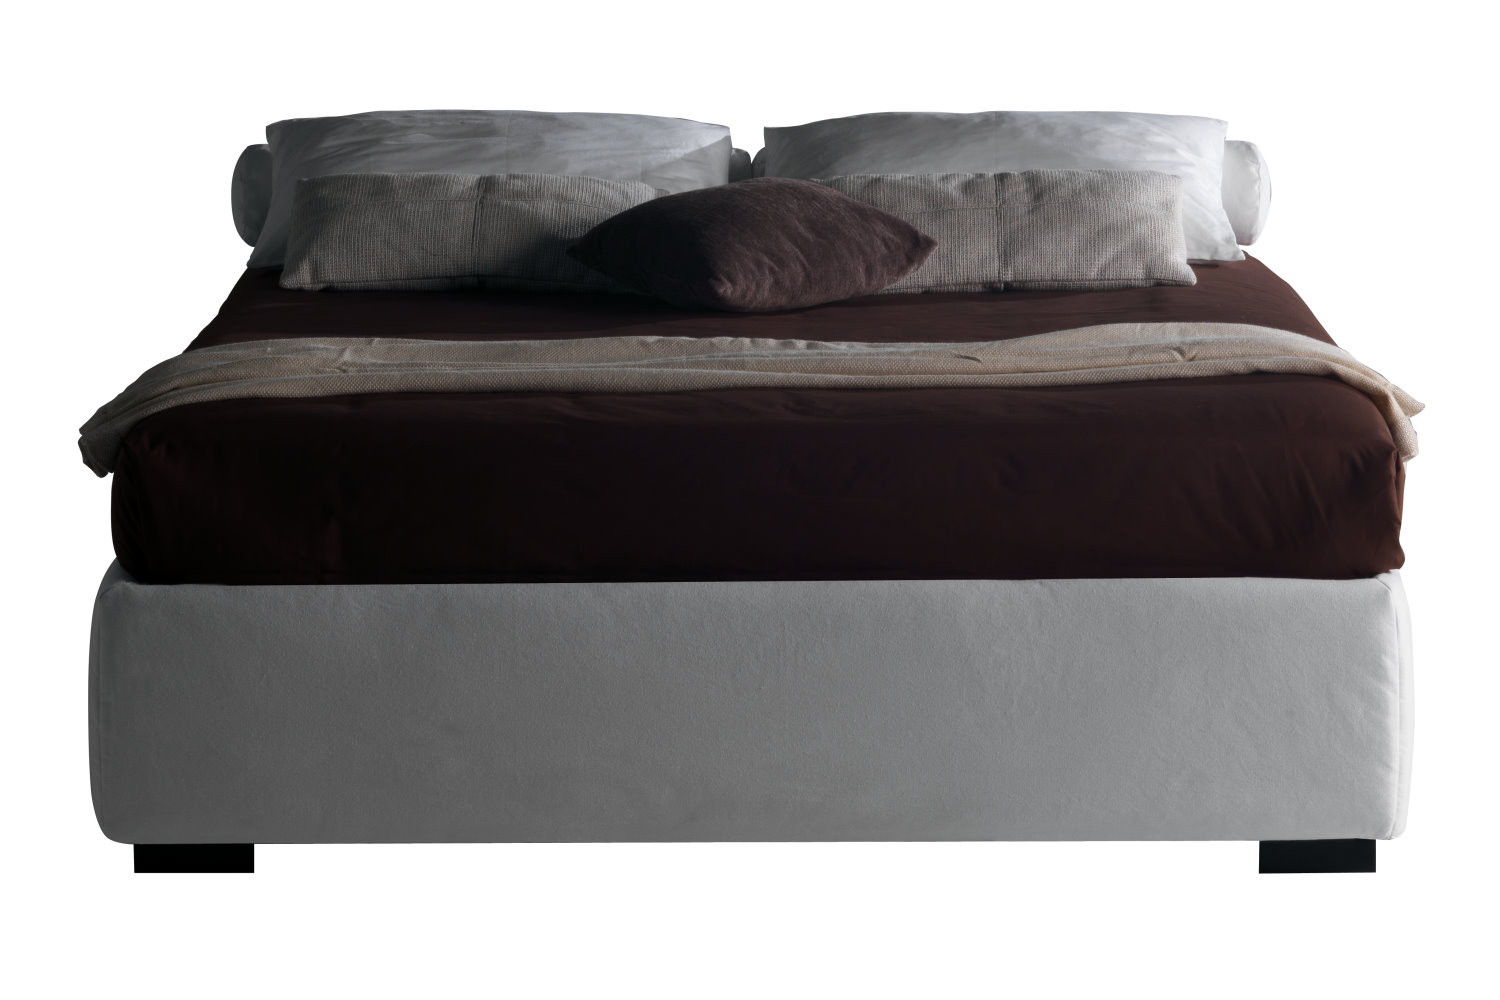 Upholstered bed frame without headboard Barbados | sofabeds.co.uk